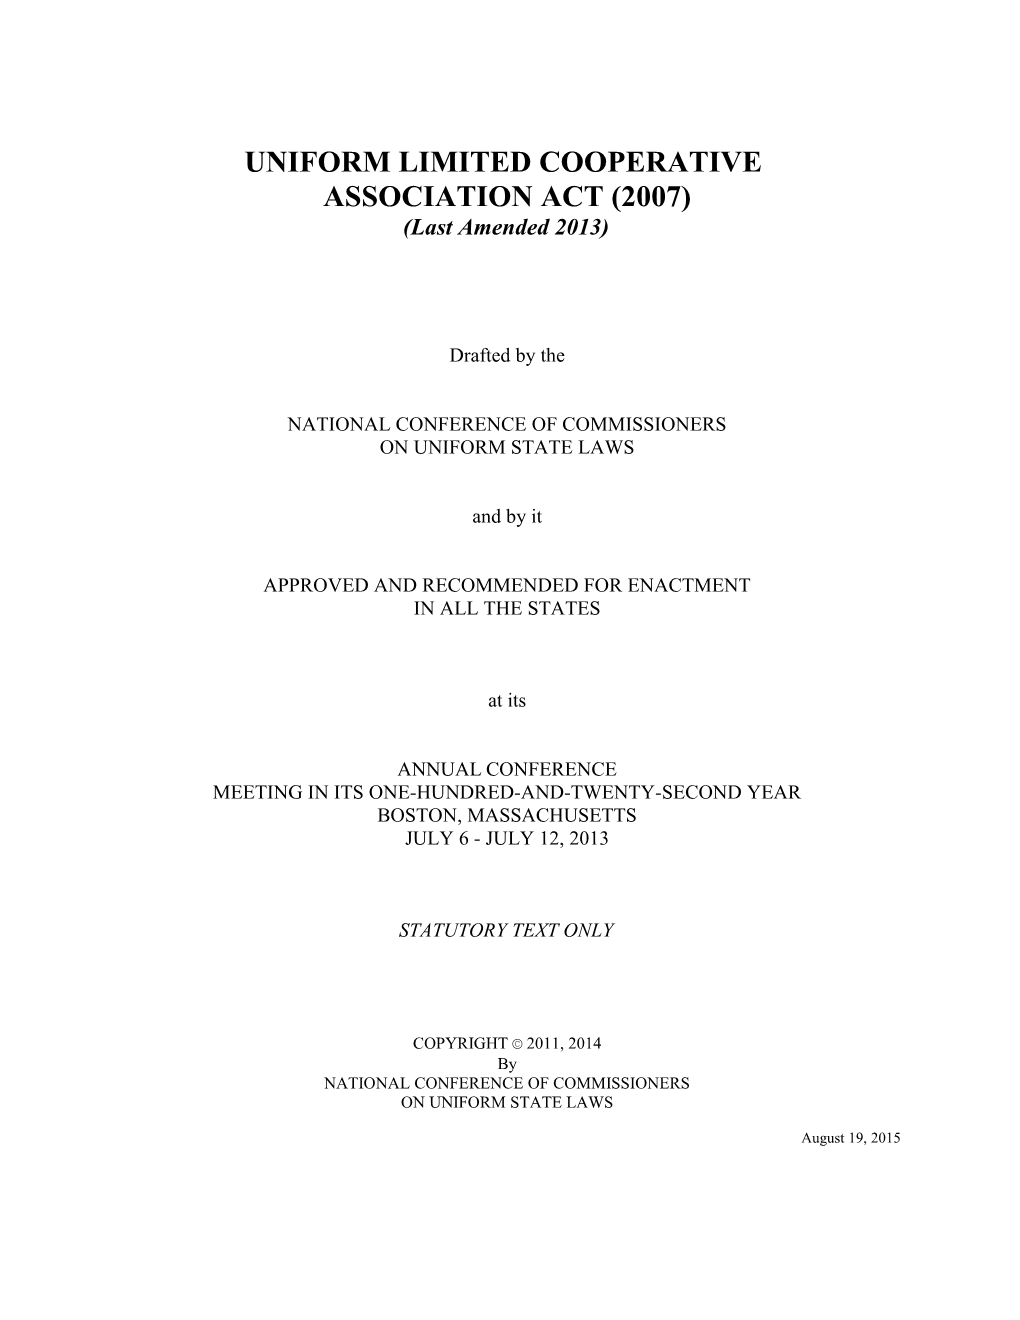 Uniform Limited Cooperative Association Act (2007)